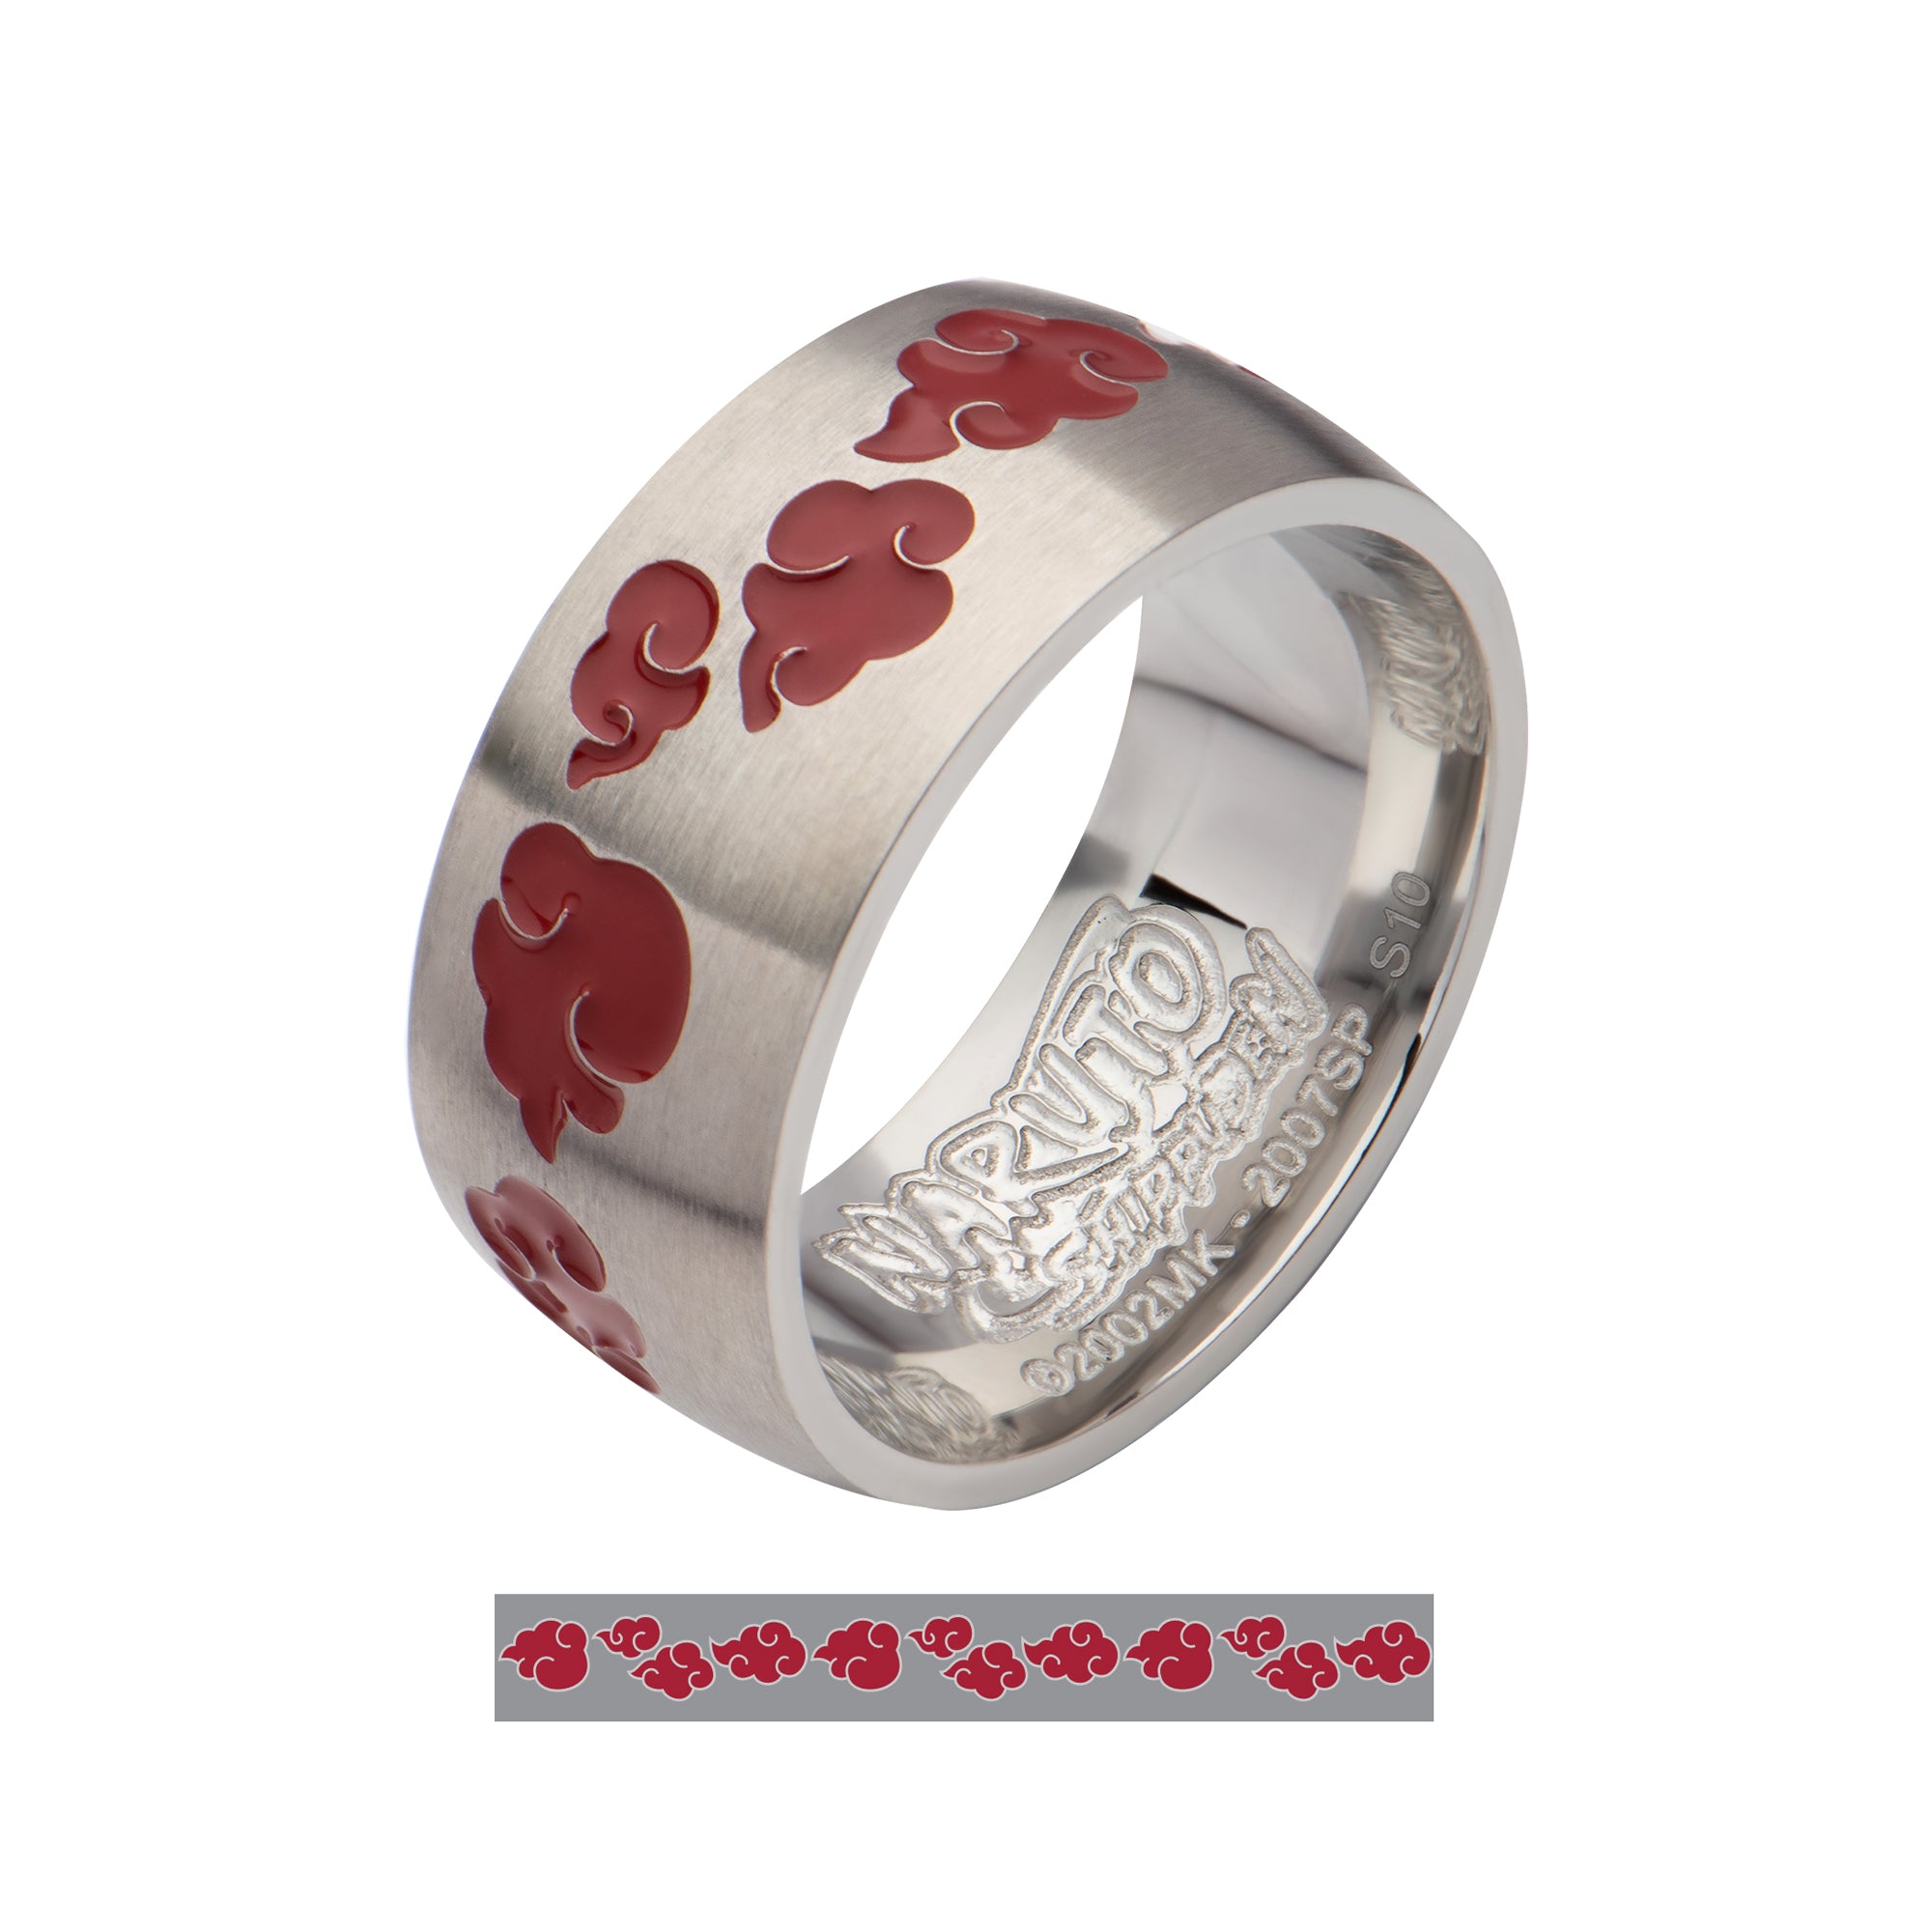 Anime Naruto Uchiha Itachi Sharingan Finger Ring Rings Jewelry S925 Silver  Gifts | eBay